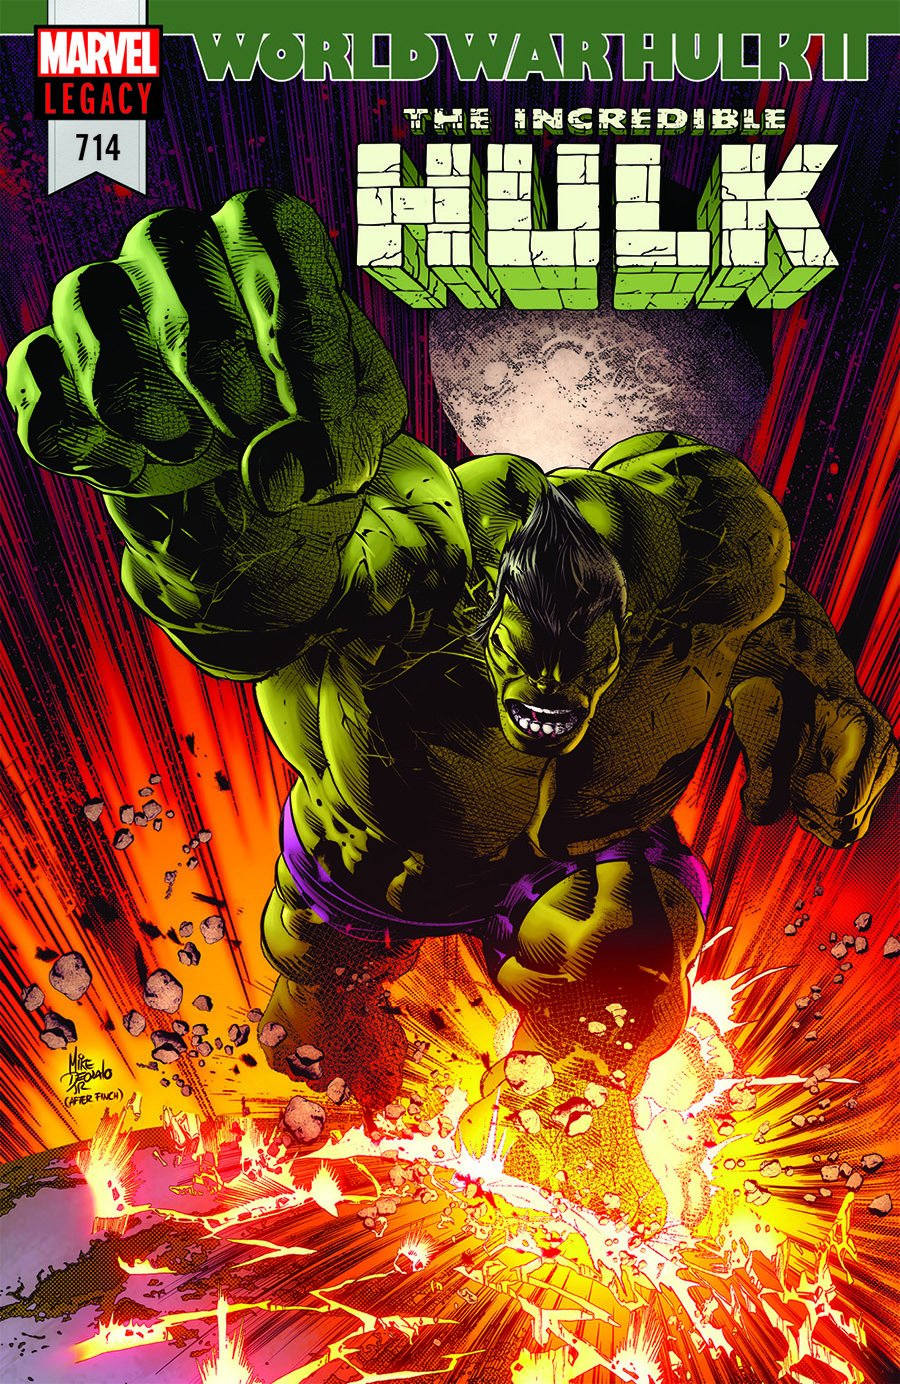 Prima copertina per War World Hulk II